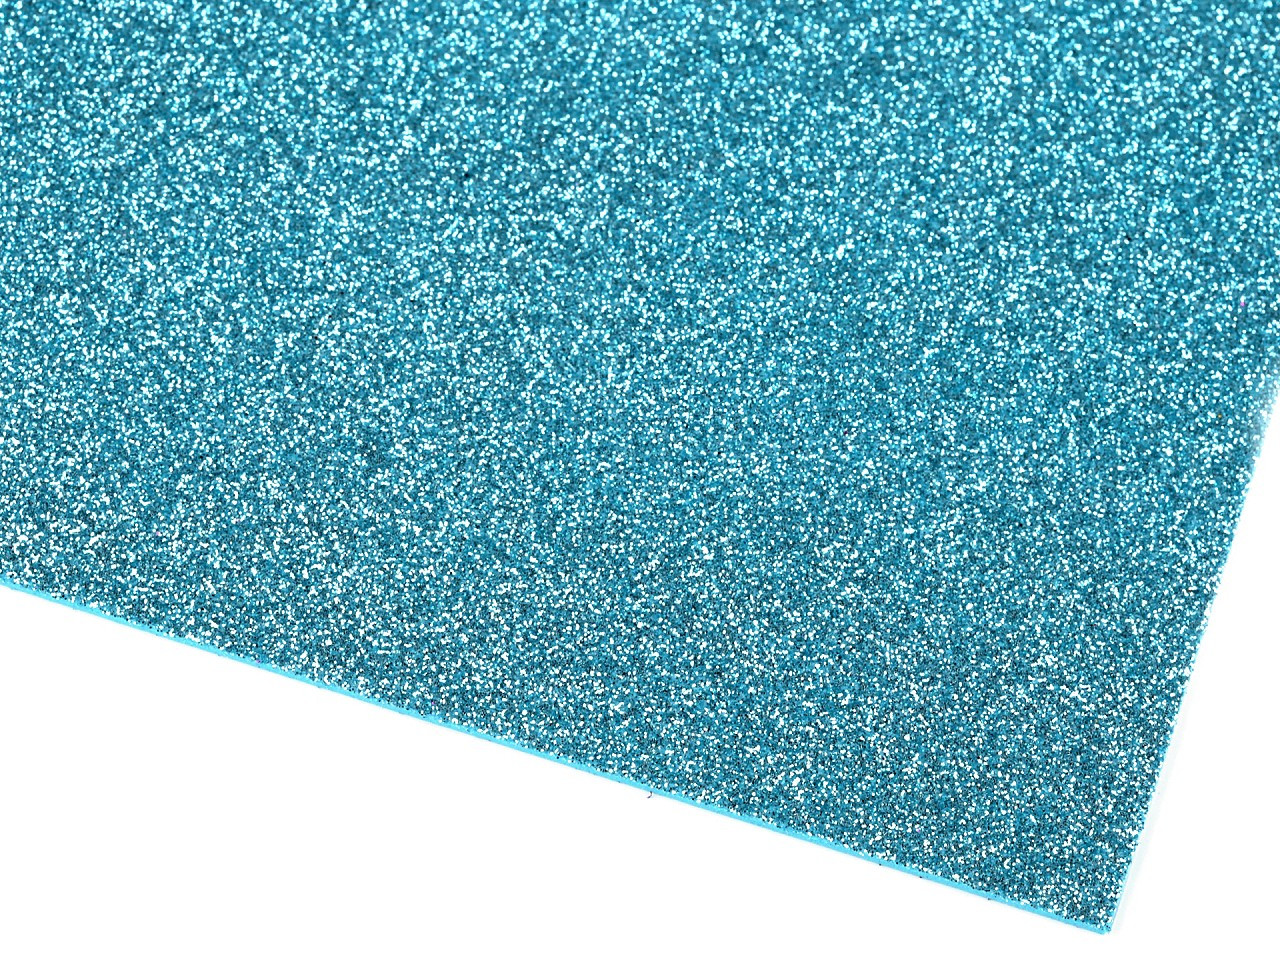 Samolepicí pěnová guma Moosgummi s glitry 20x30 cm, barva 14 modrá tyrkys